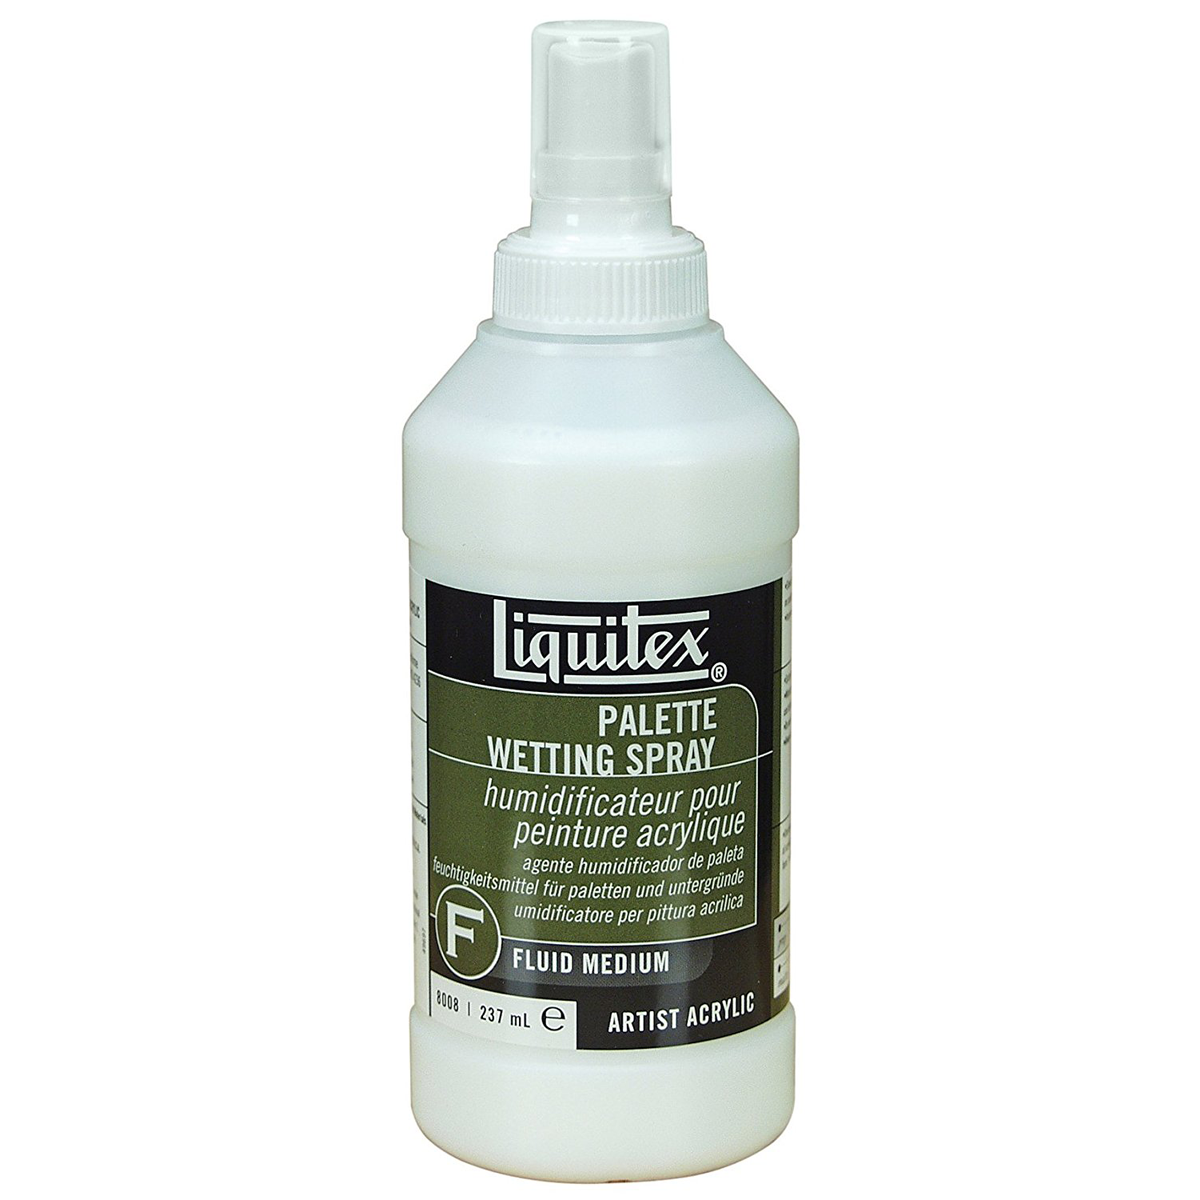 Liquitex Professional Palette Wetting Spray Fluid Medium 237ml/8oz